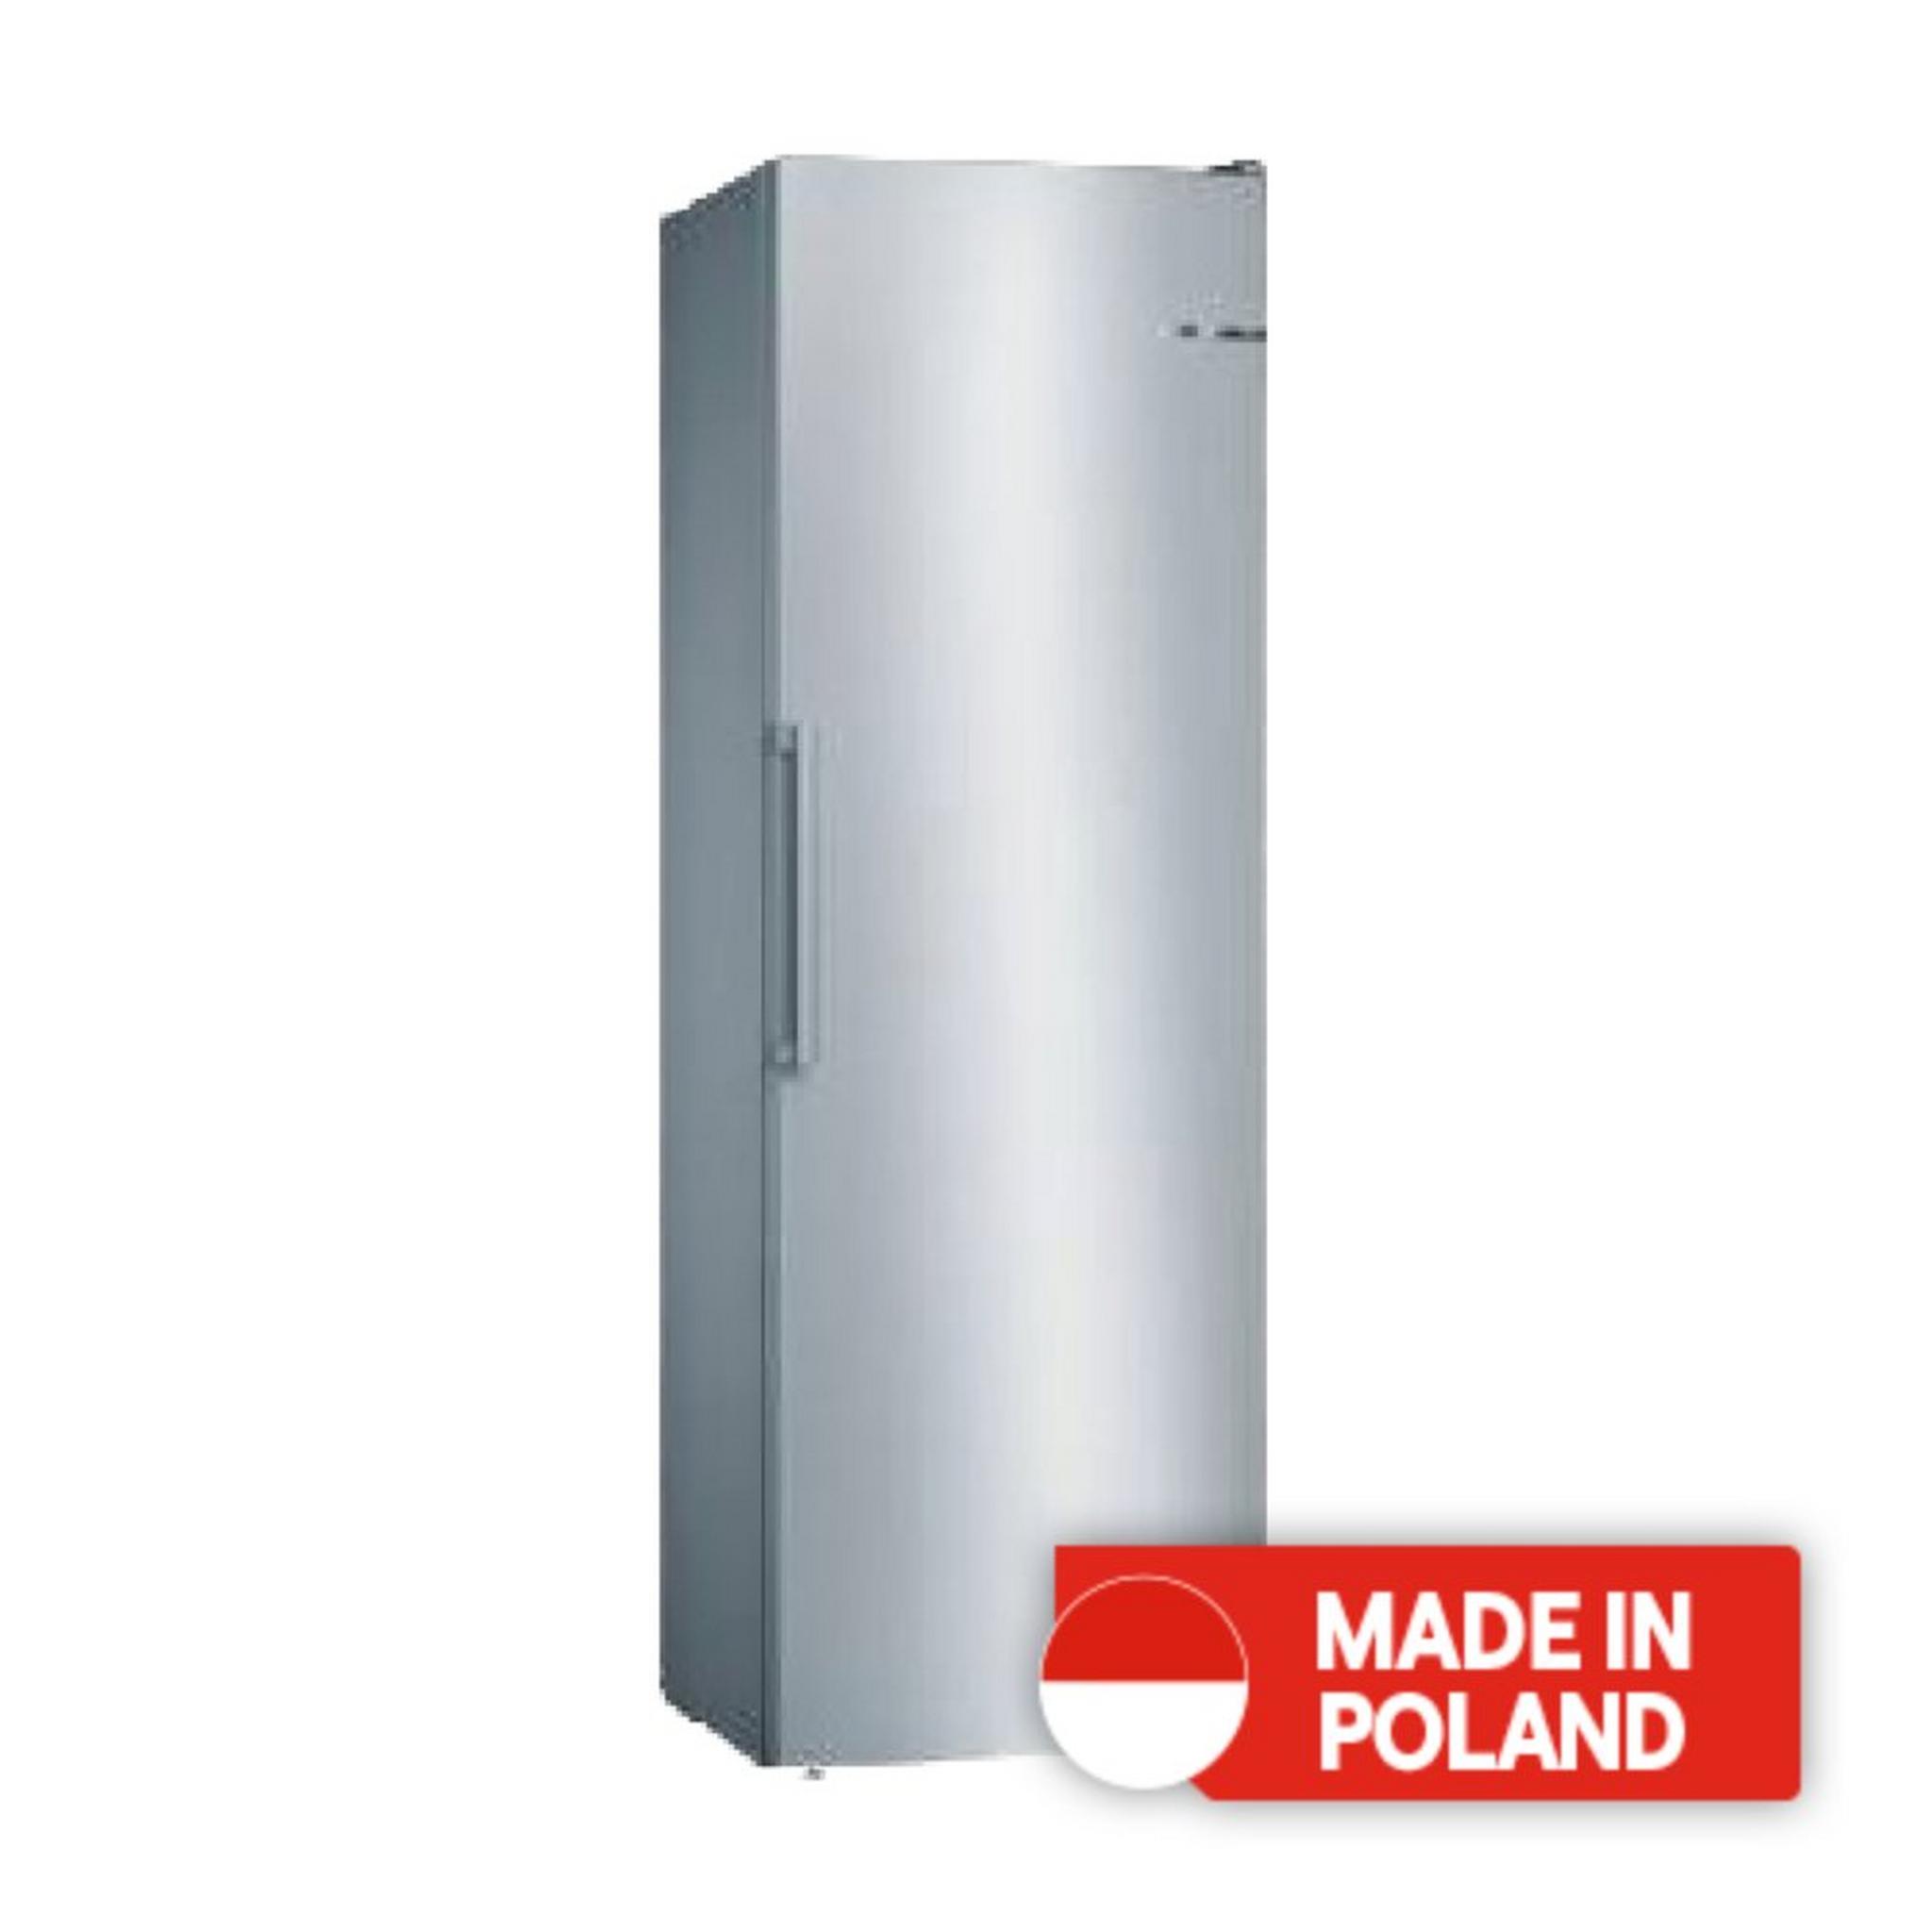 Bosch Upright Freezer, 9CFT, 242-Liters, GSN36VL3PG - Stainless Steel